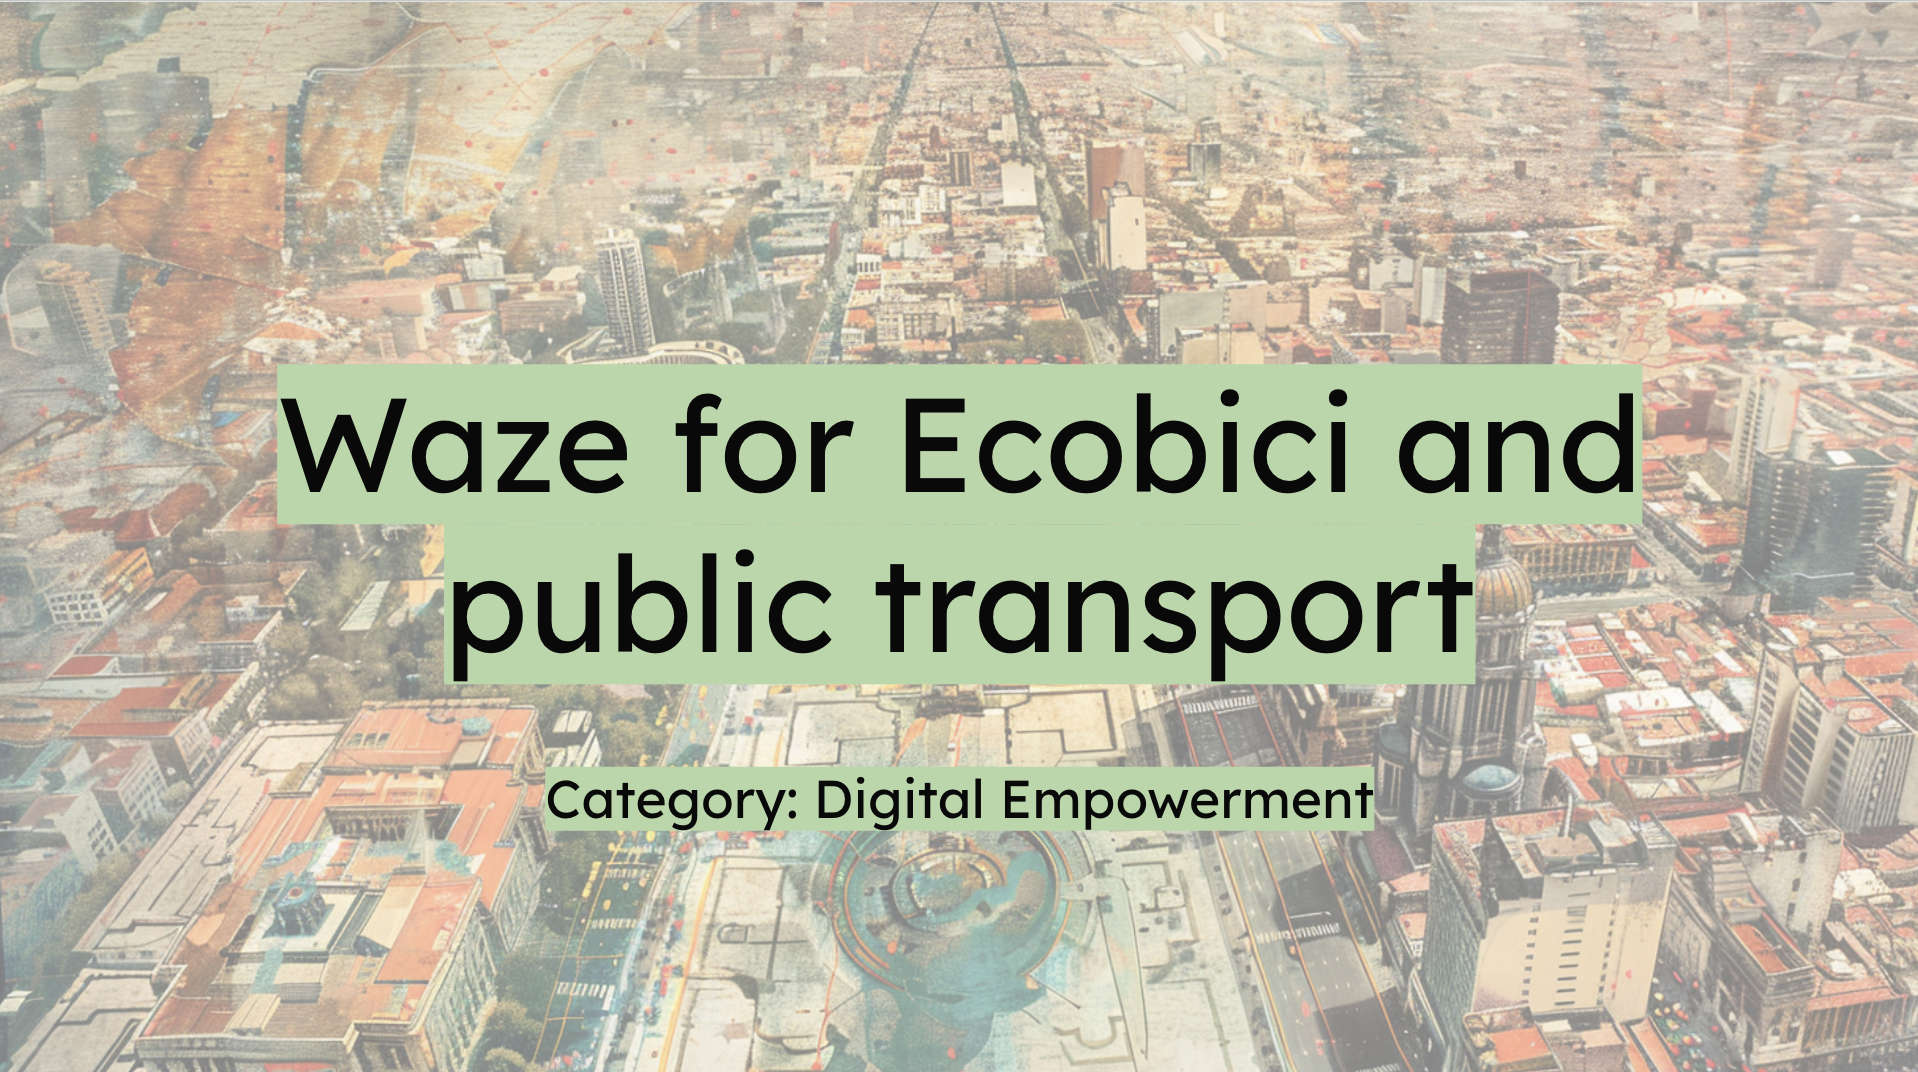 Waze for Ecobici and public transport